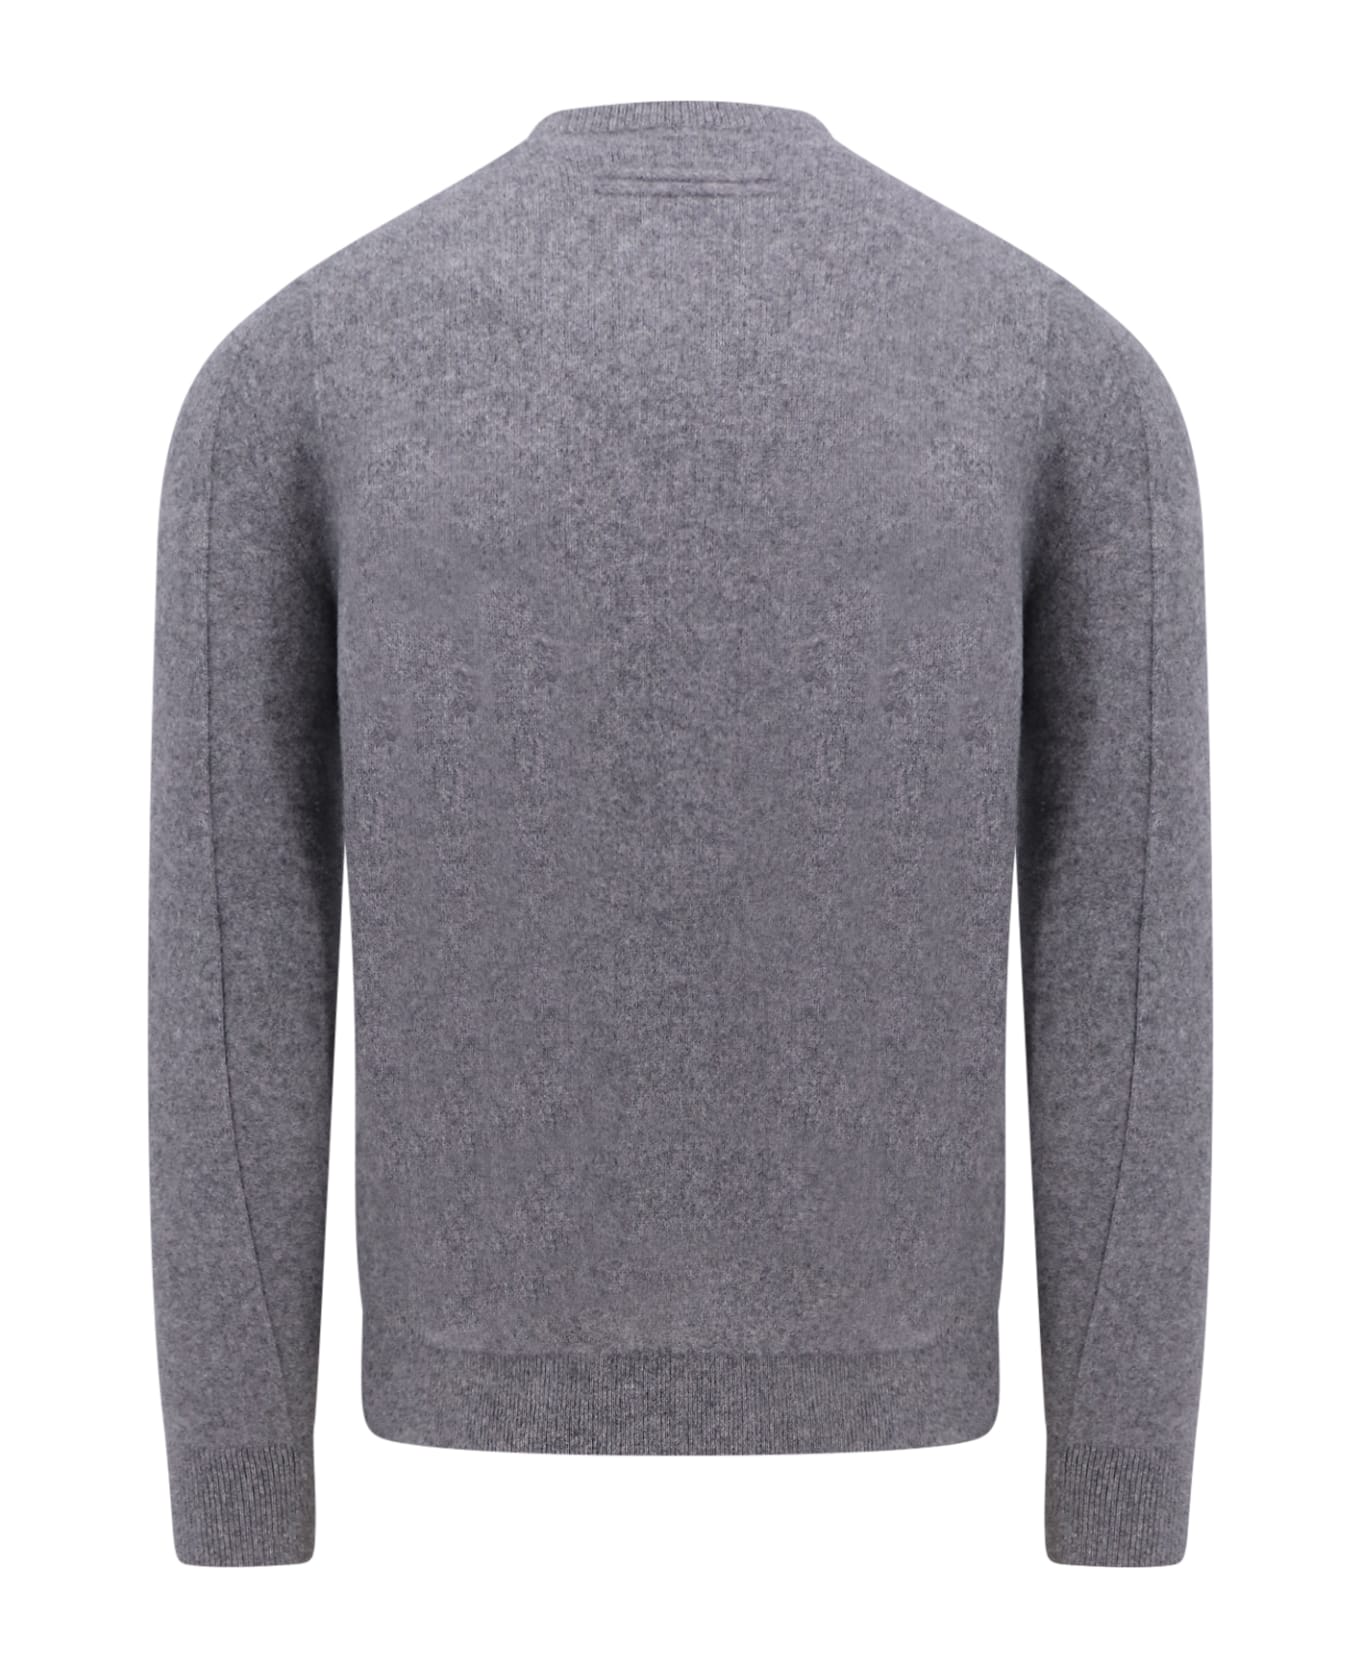 Zegna Sweater - Grey